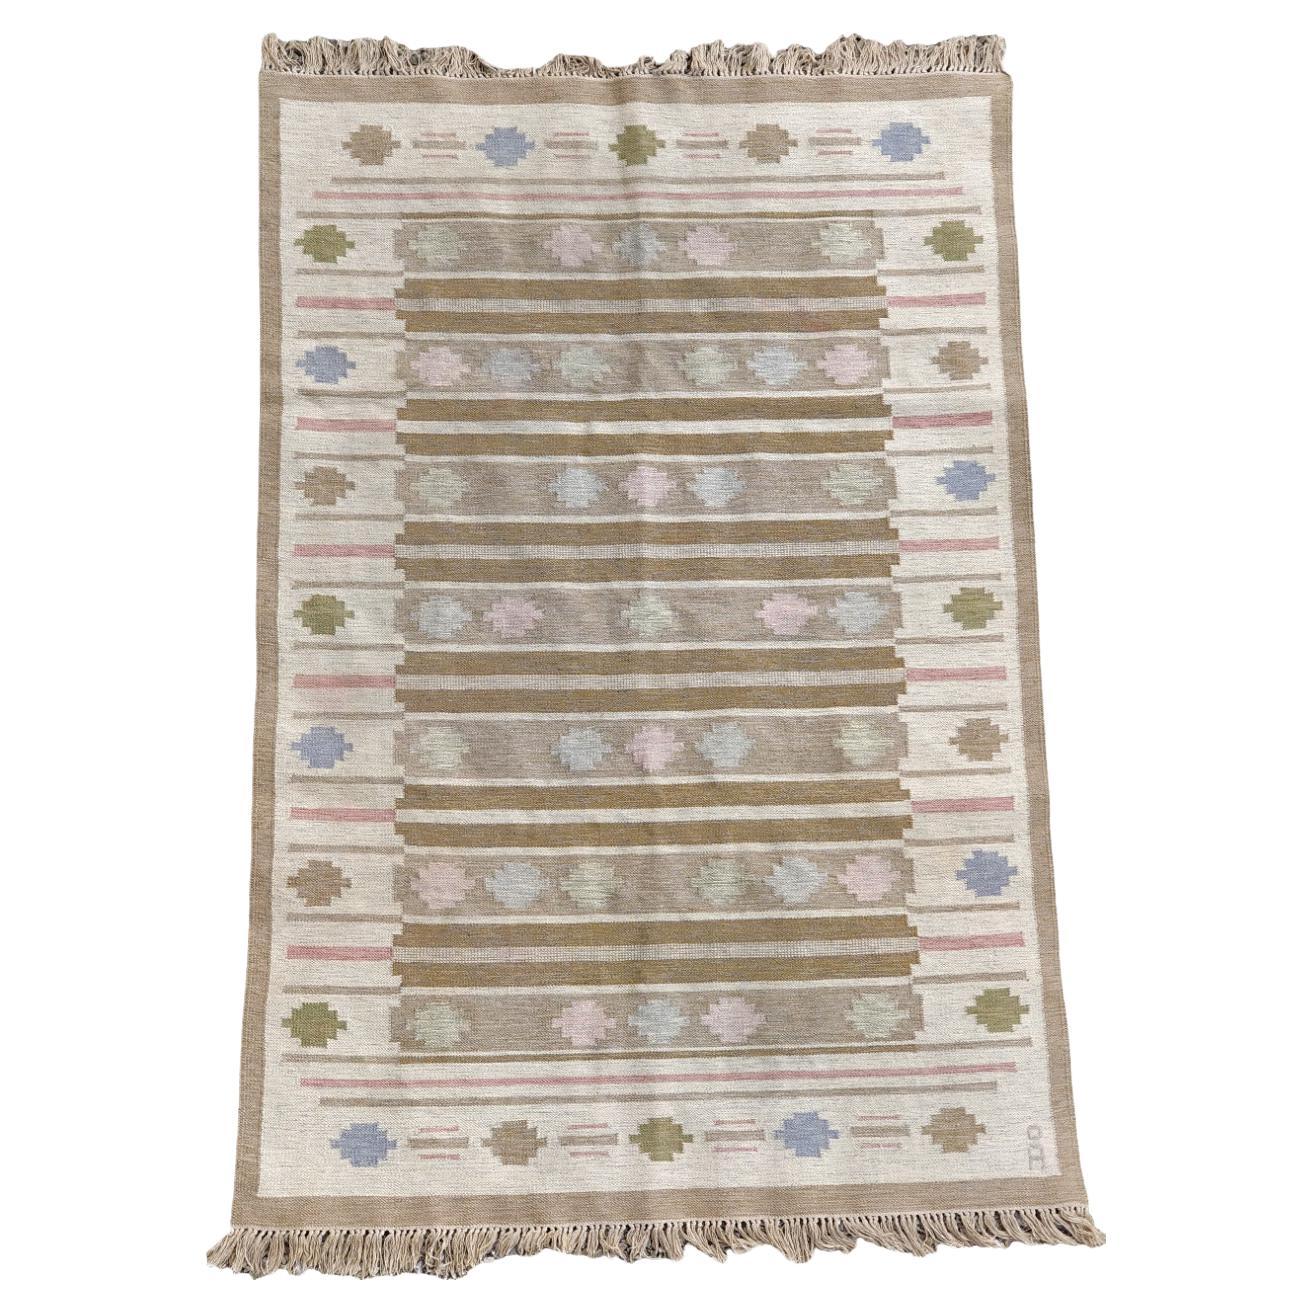  Flat-weave Kilim carpet by Swedish textile designer Anna Johanna Ångström  